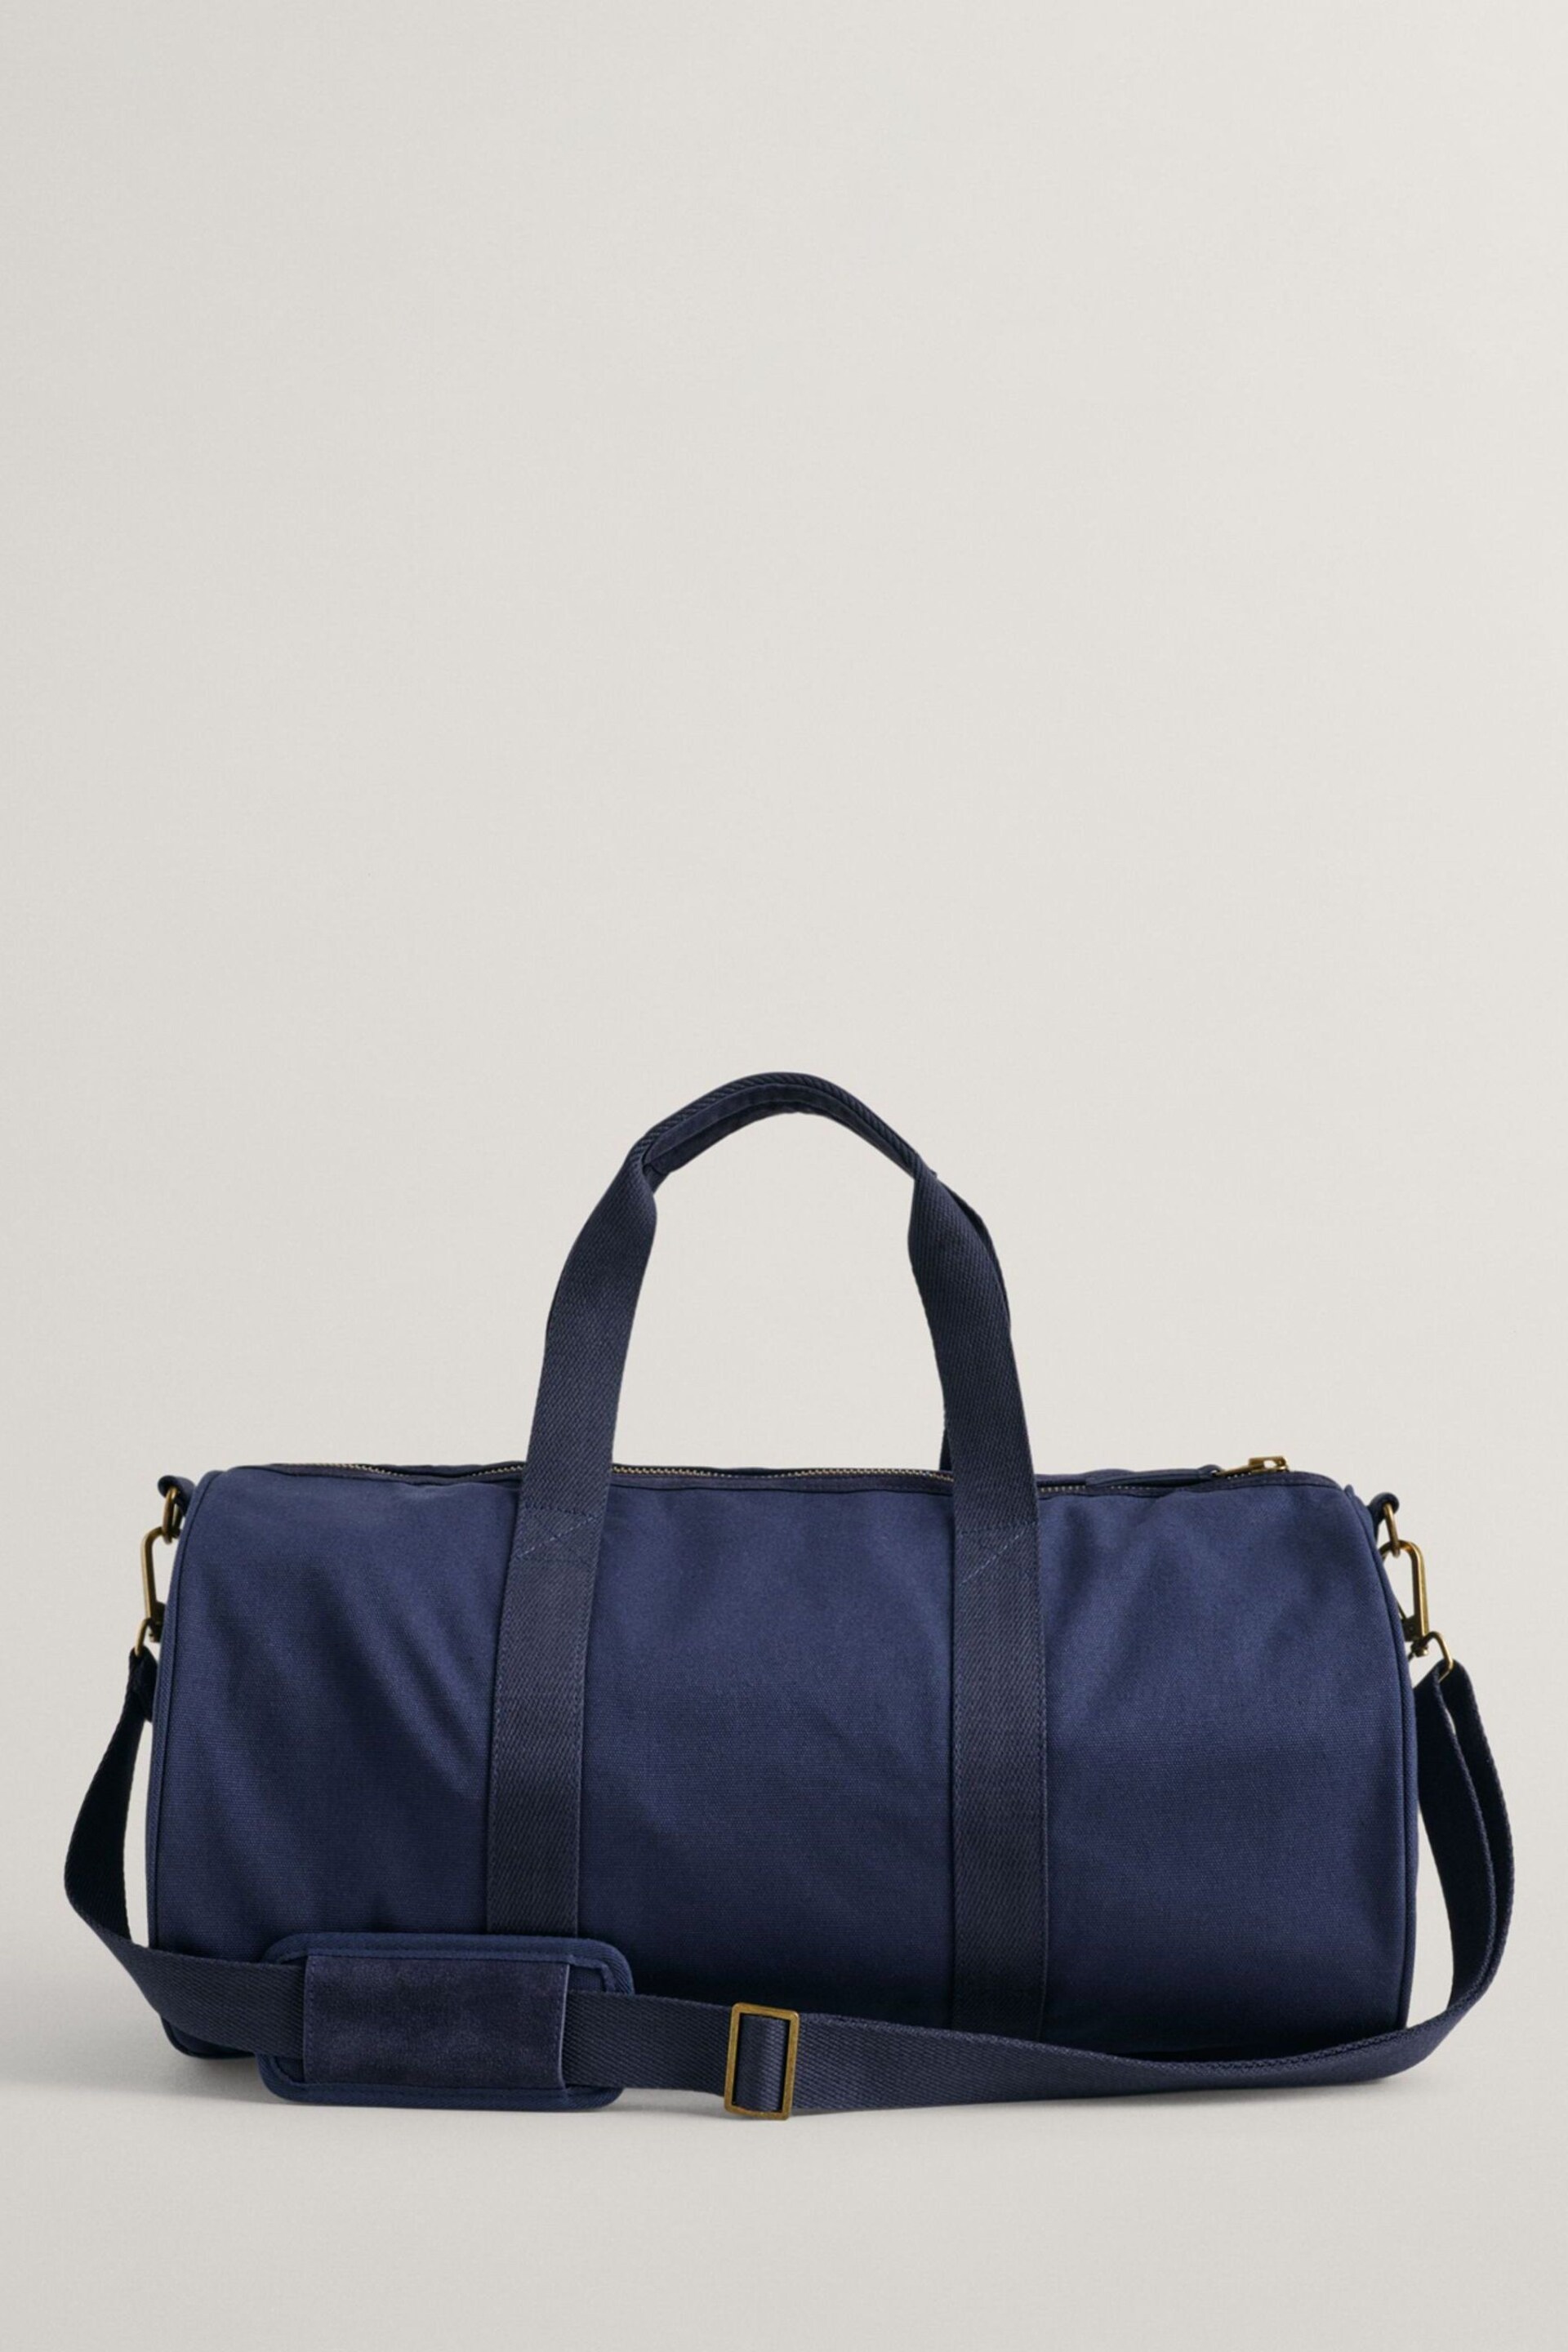 GANT Blue Colour Shield Duffel Bag - Image 3 of 7